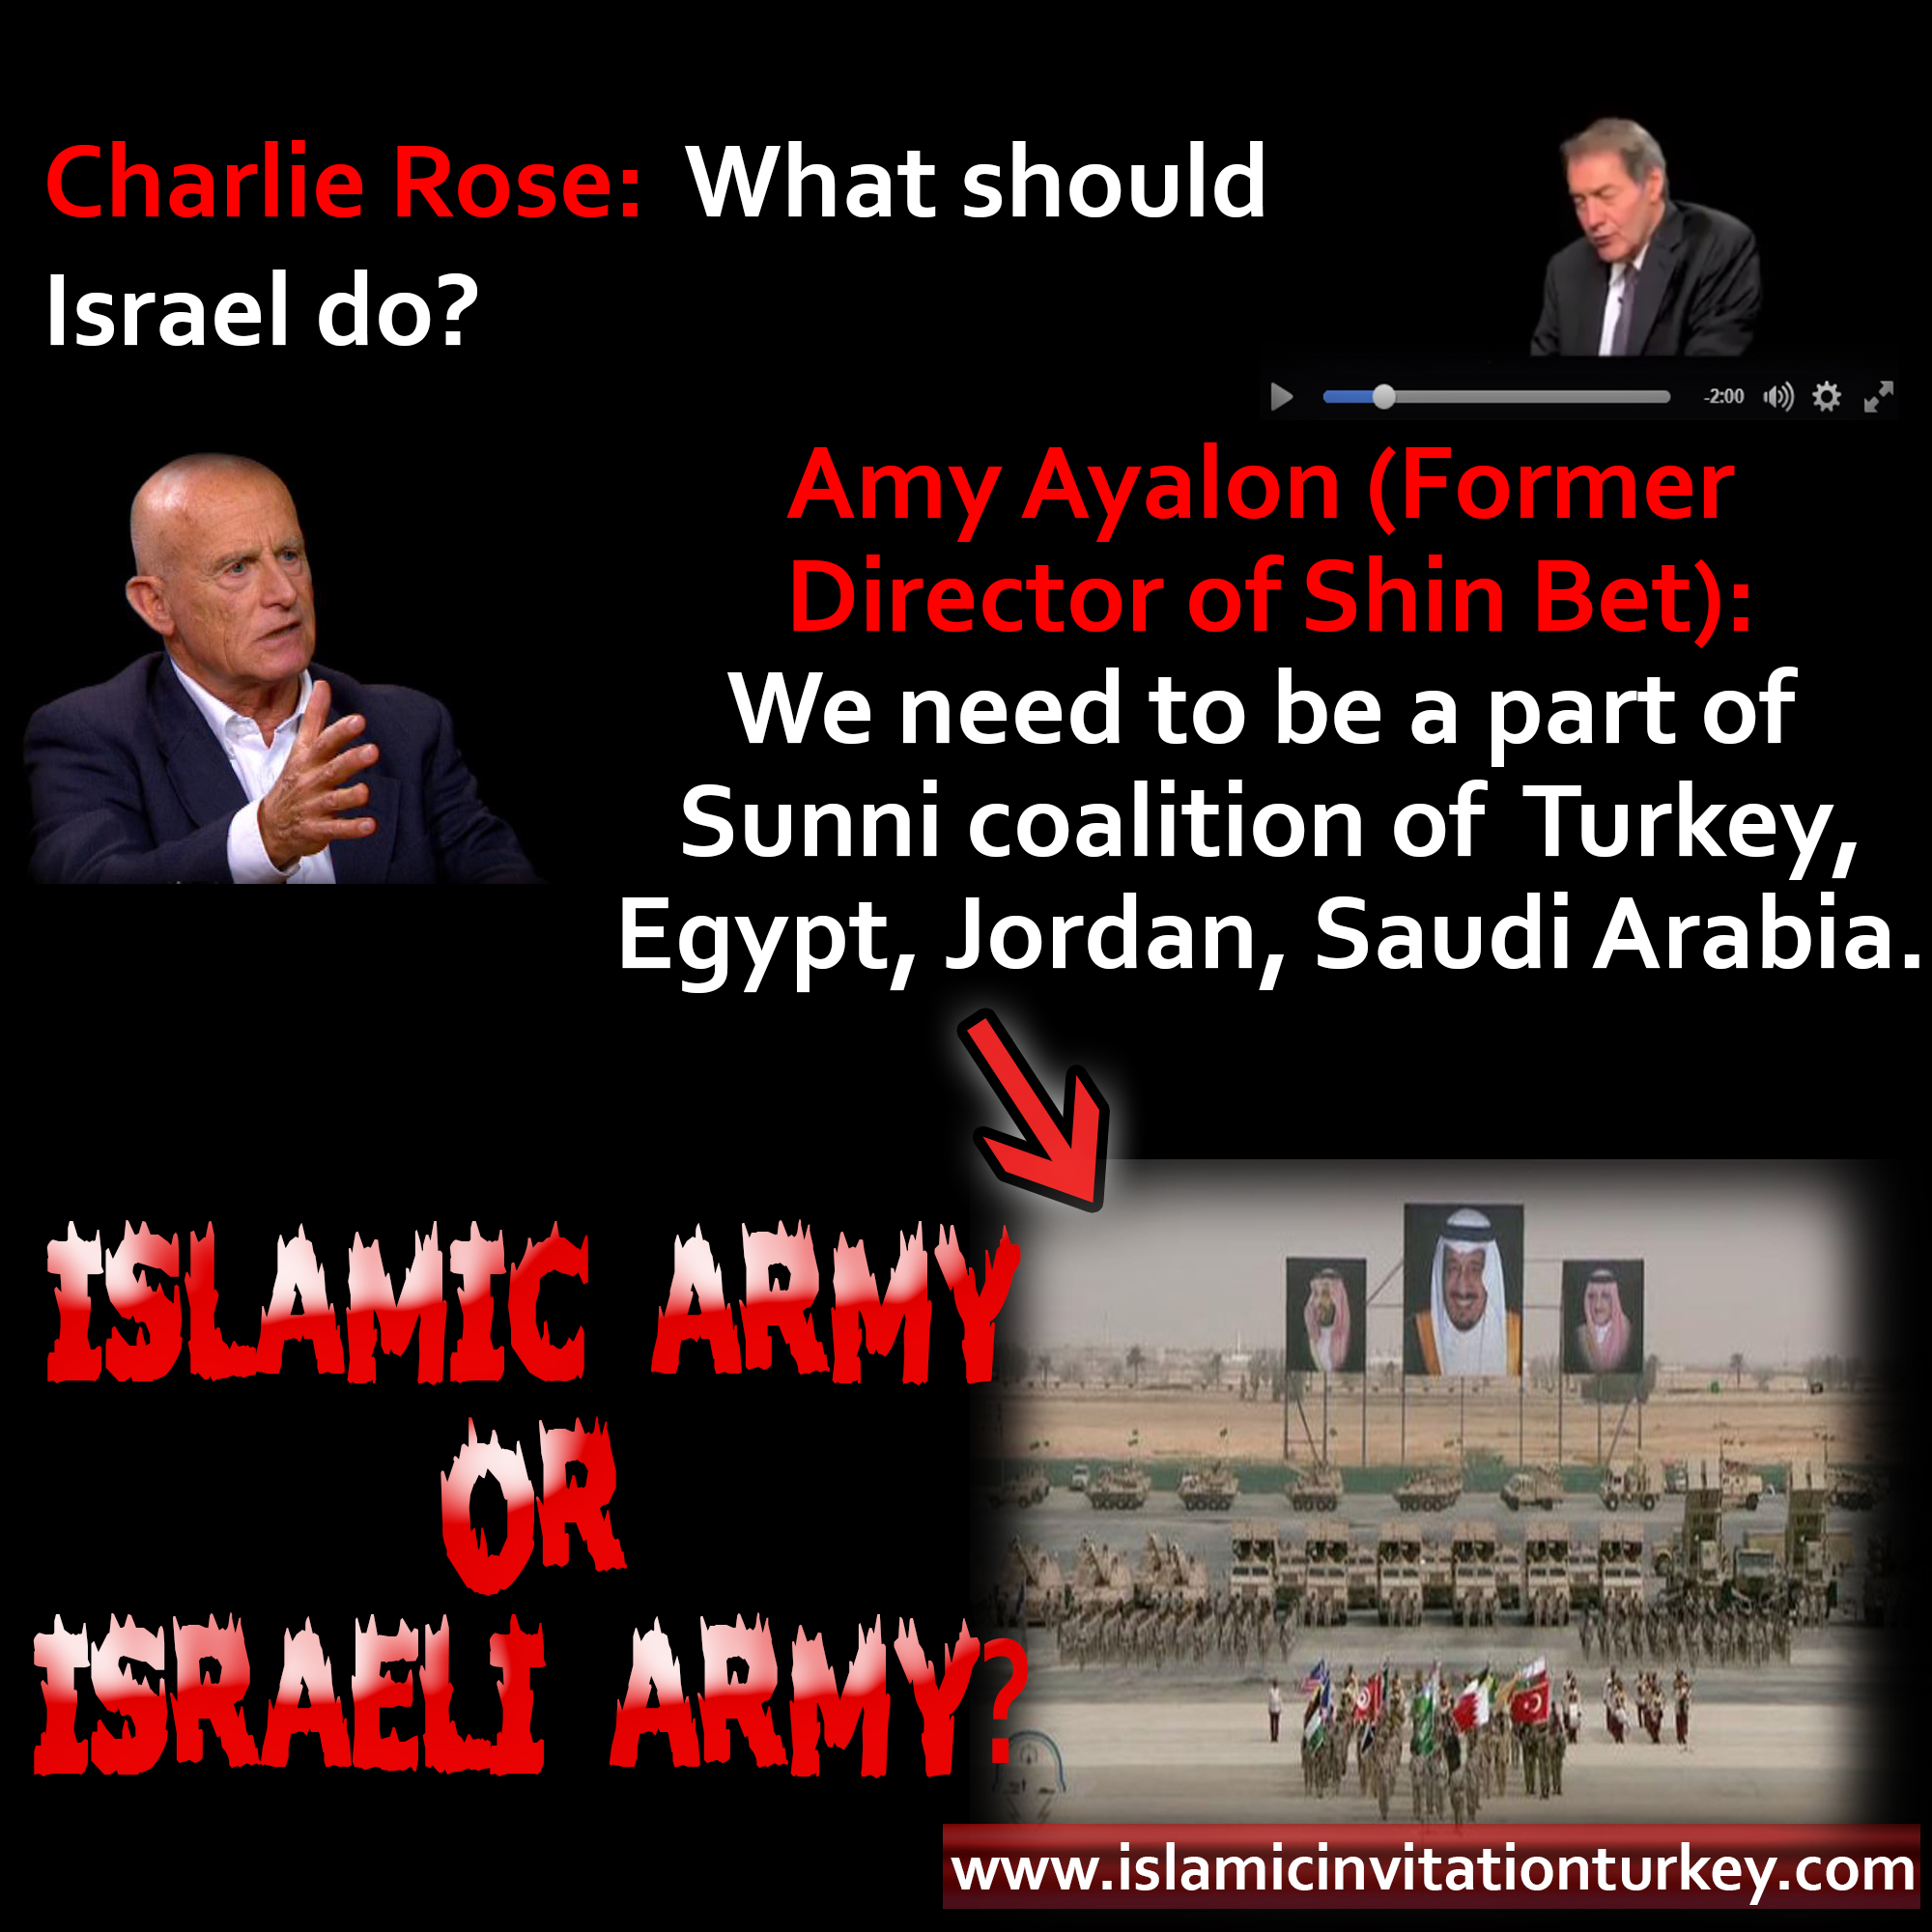 mohammad army or israeli army